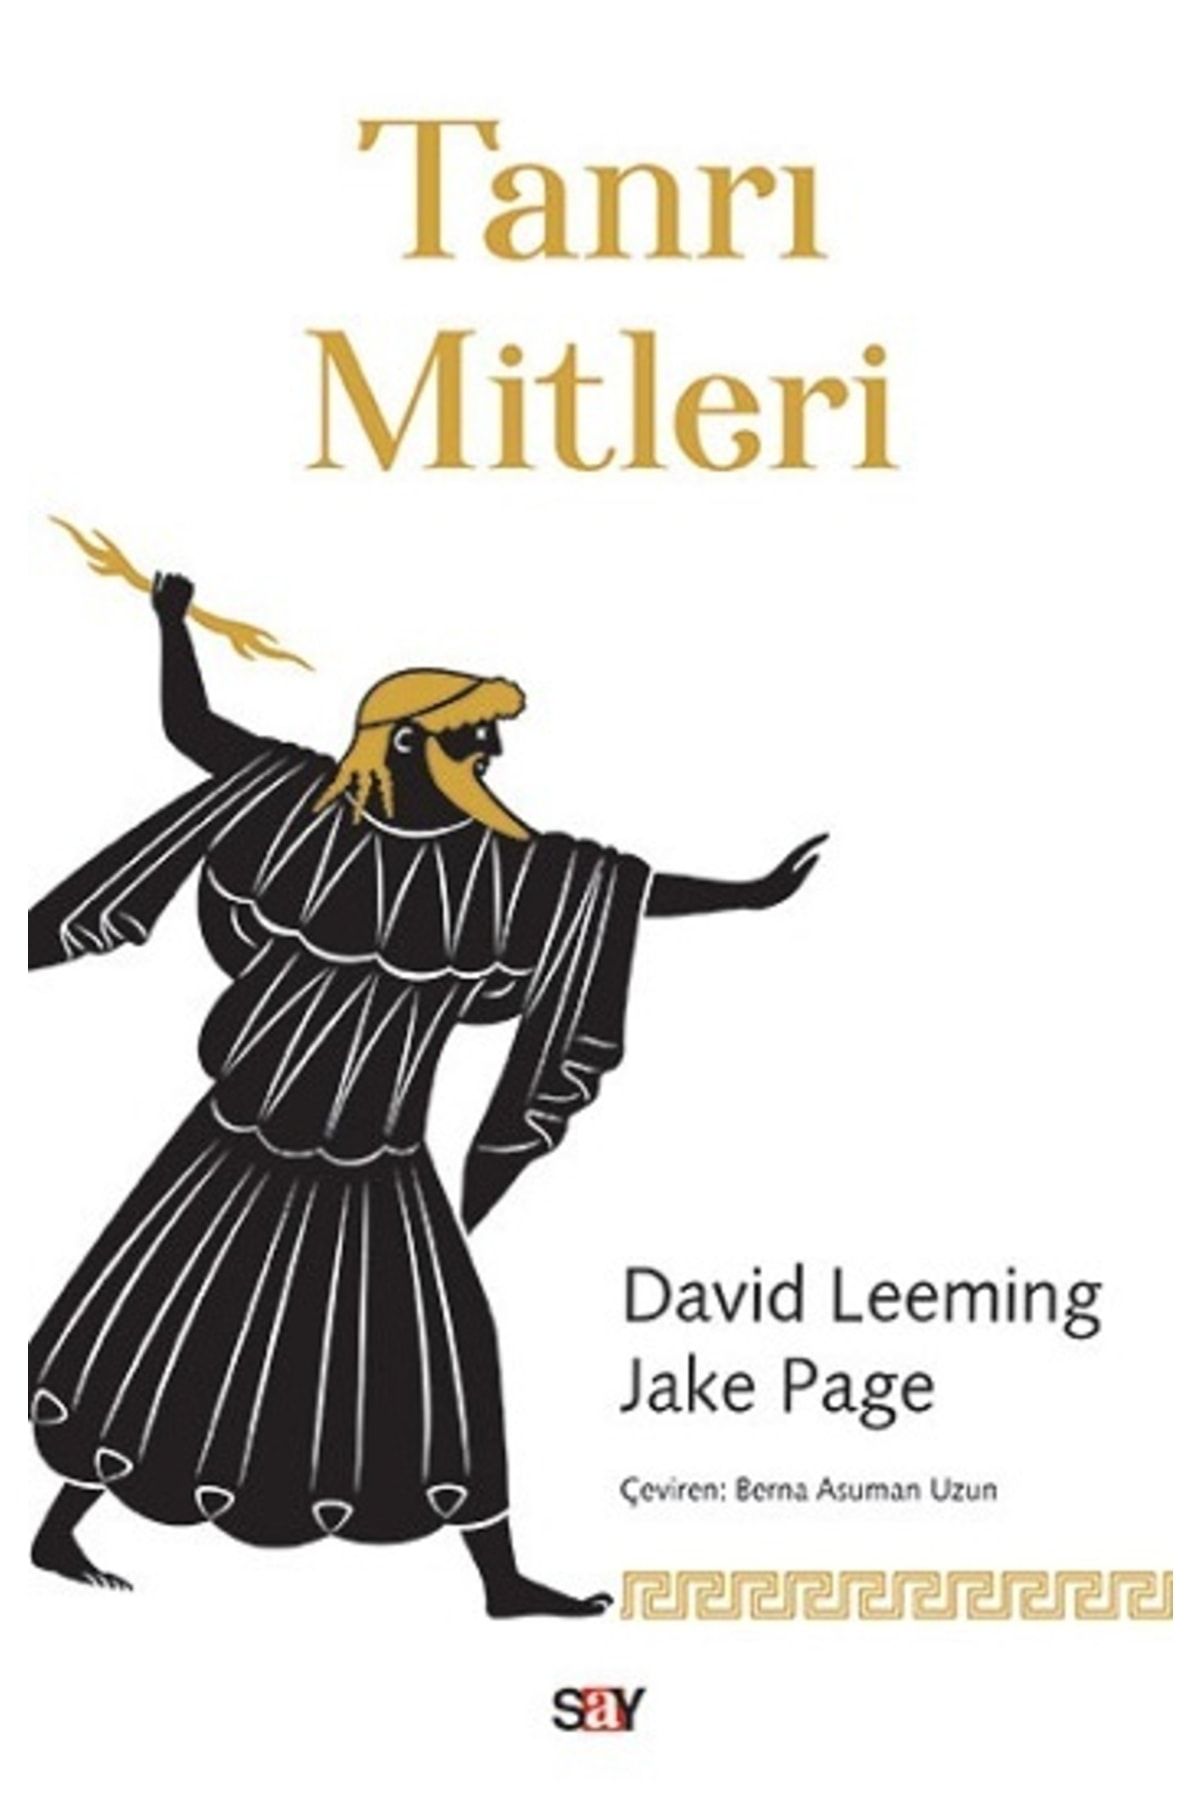 Say Yayınları Tanrı Mitleri - - David Leeming & Jake Page Kitabı